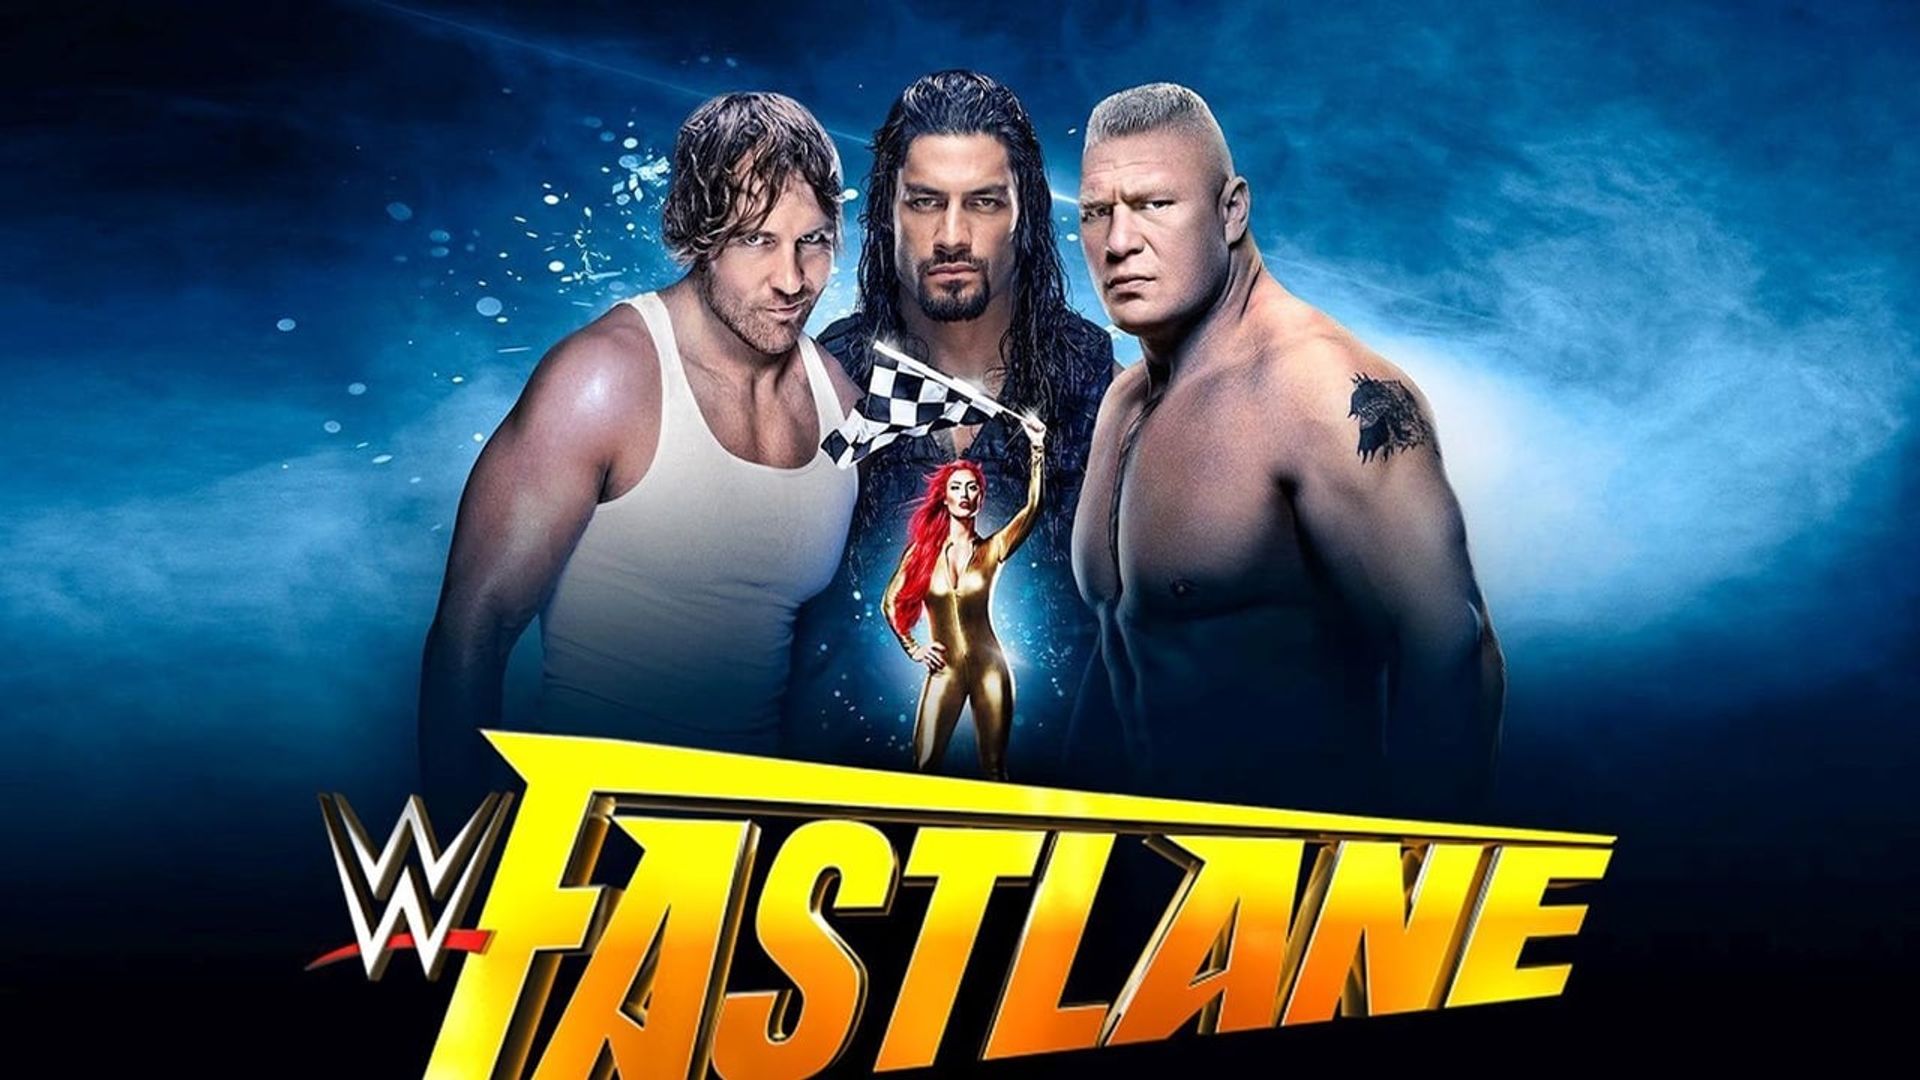 WWE Fastlane background